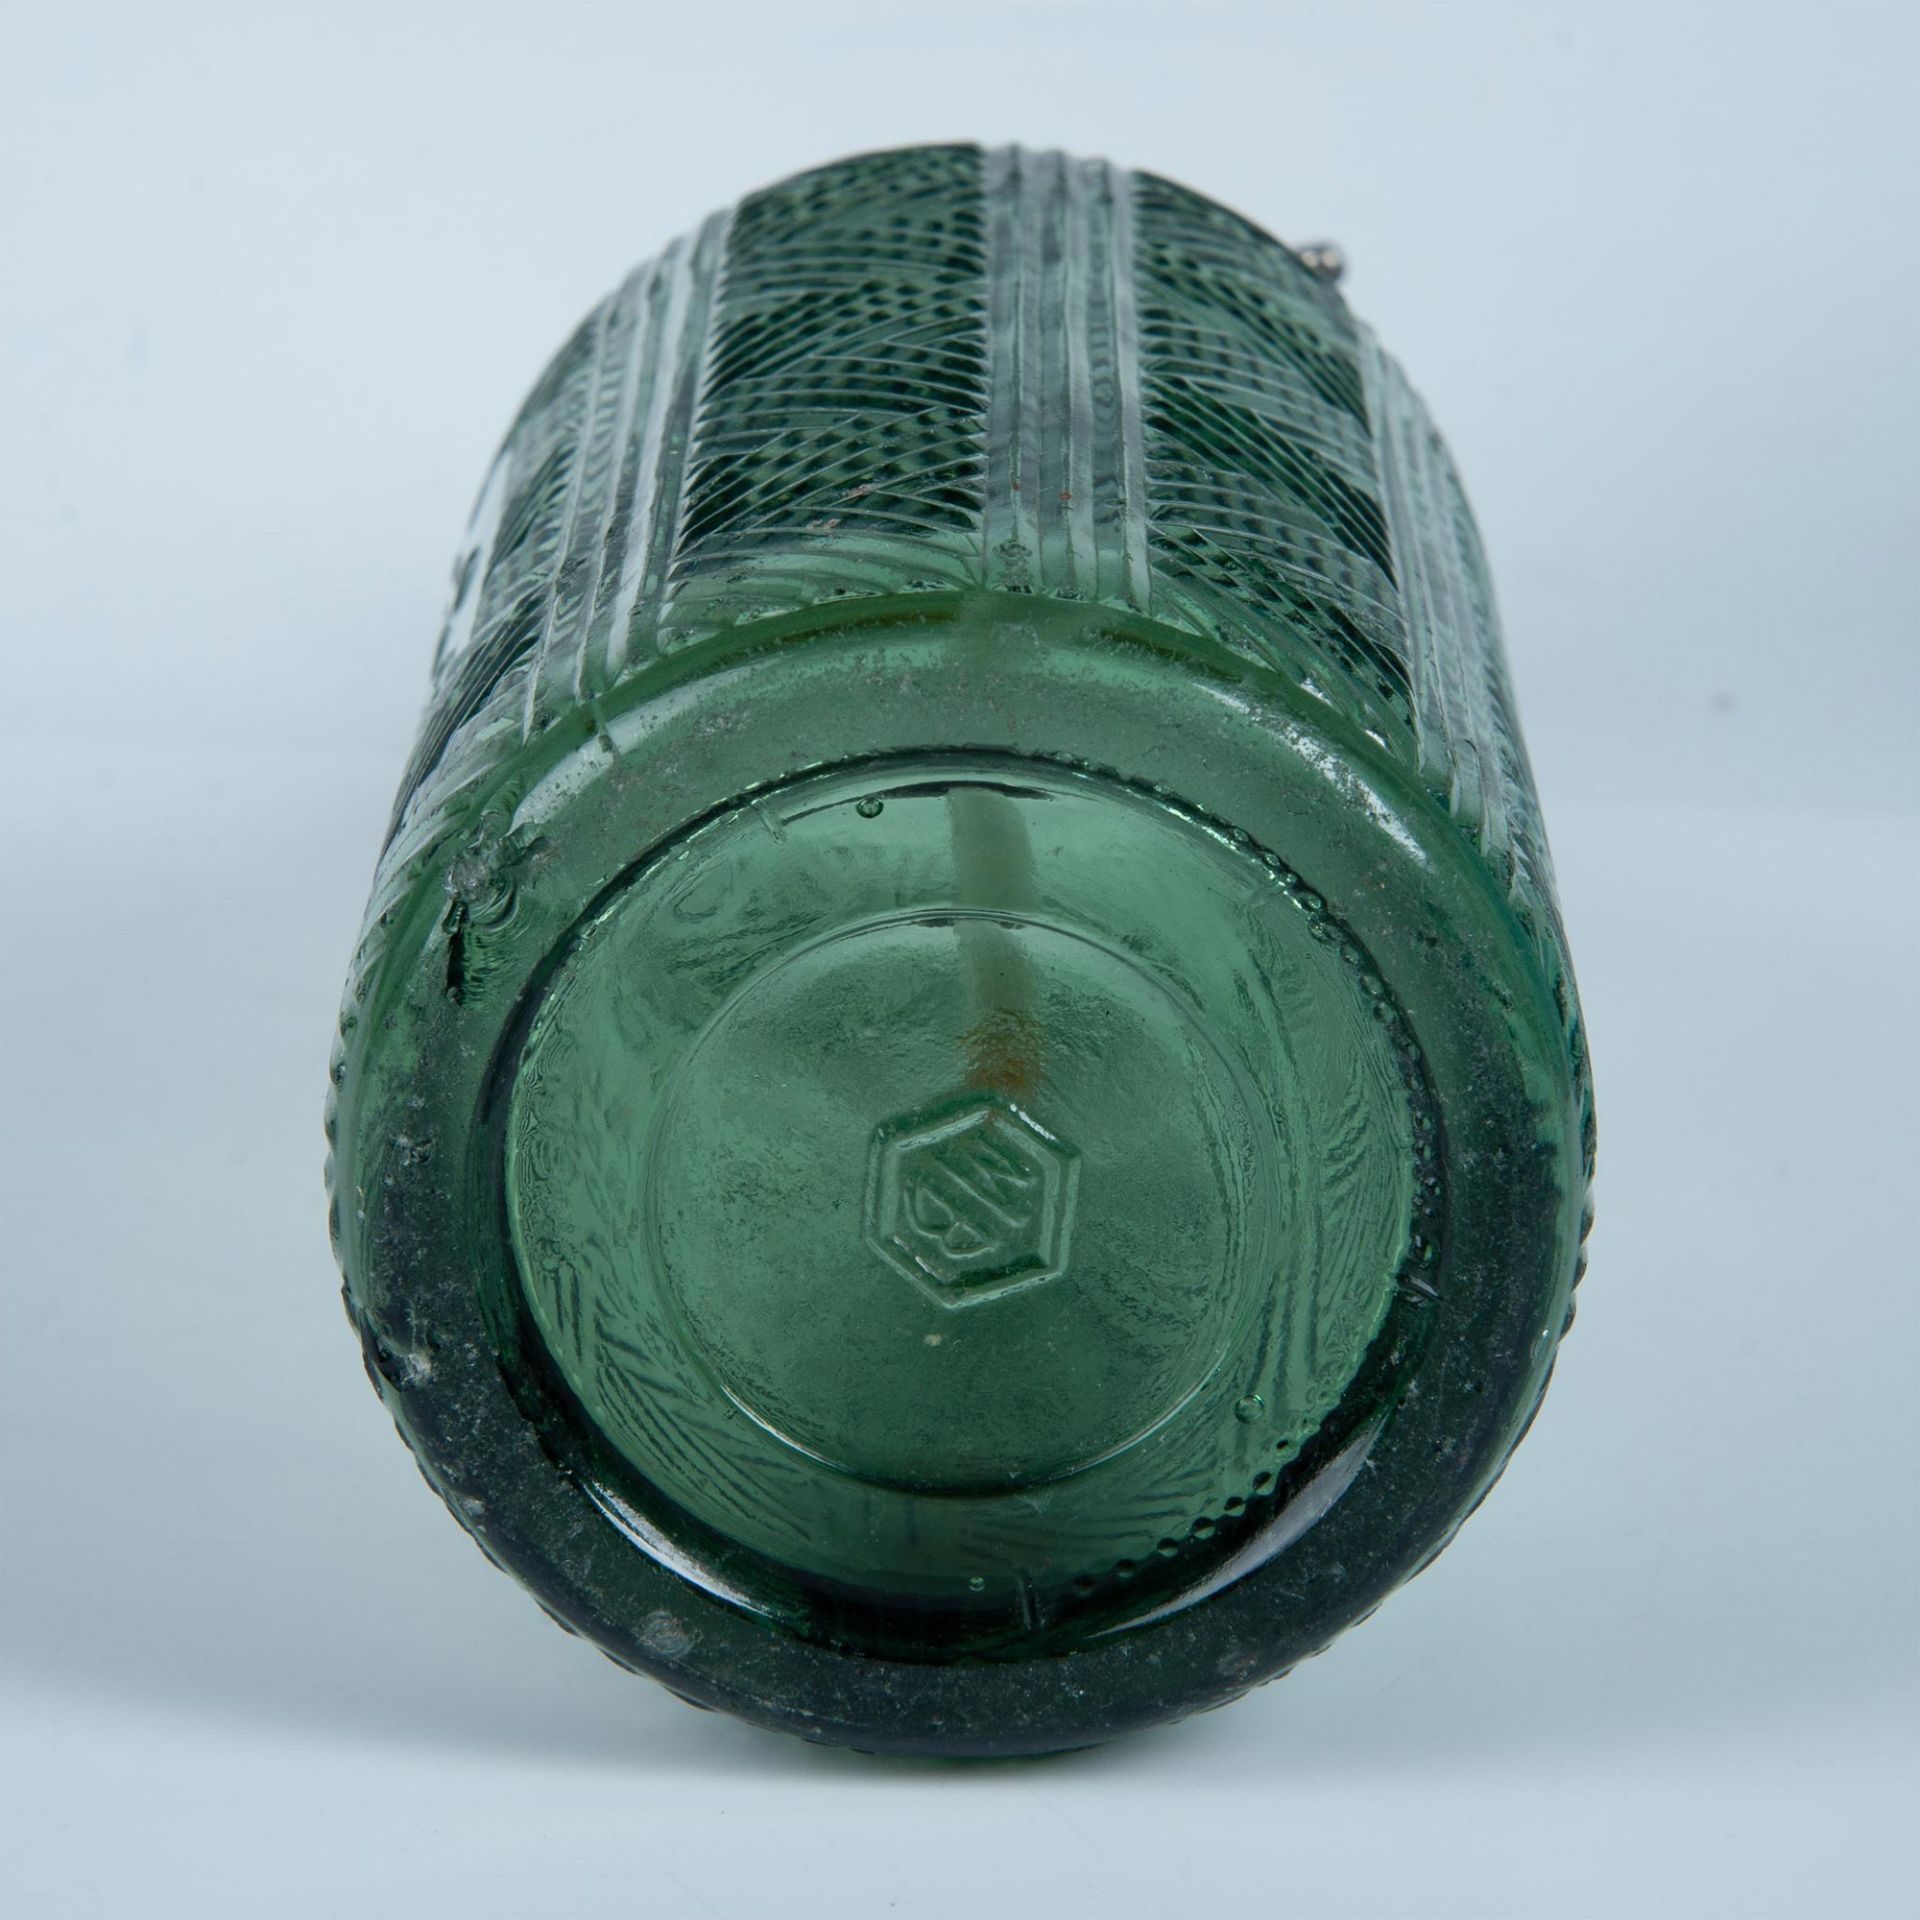 Antique Seltzer Bottle Gonzalez Hnos, Argentina - Image 7 of 7